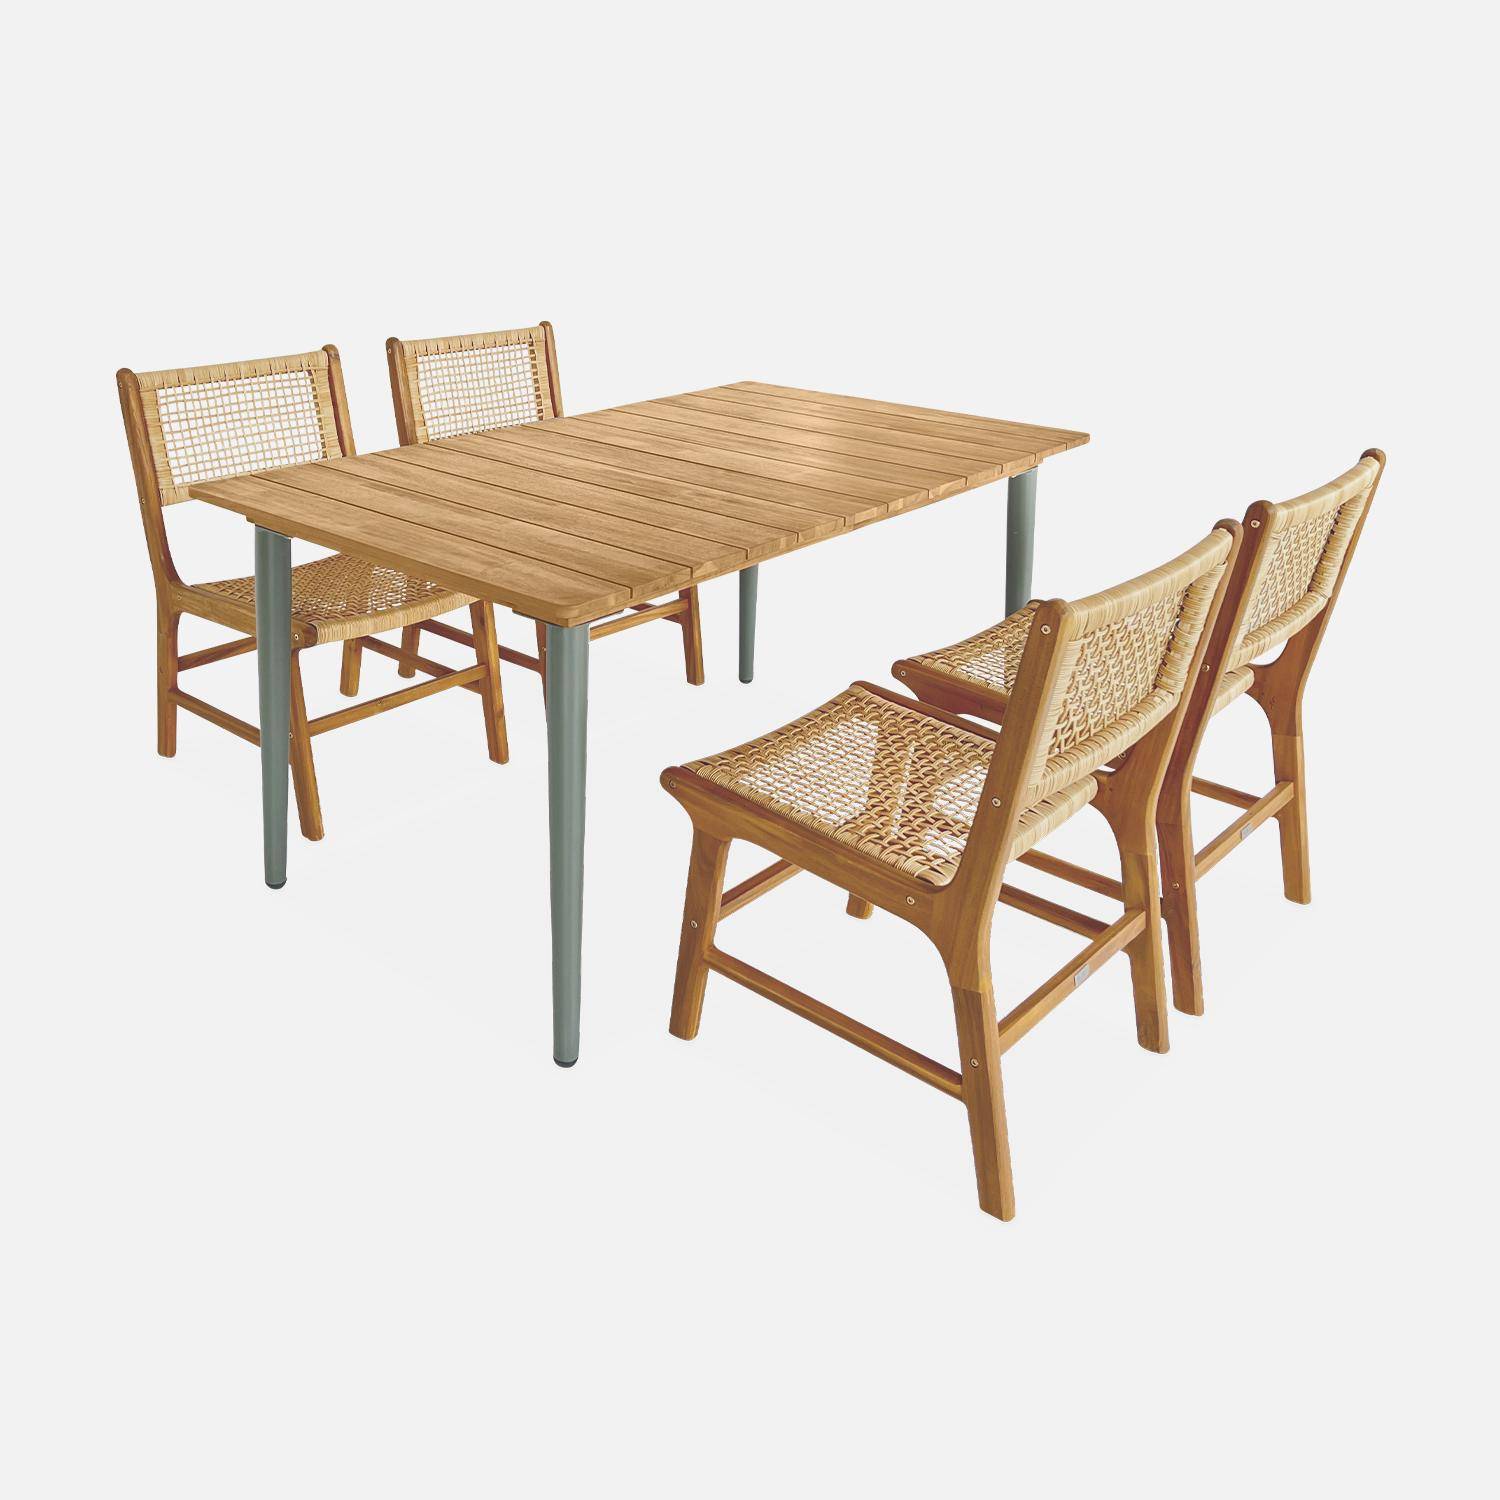 Table de jardin MARINGA bois et métal savane, 150cm + 4 chaises de jardin Ocara, cannage et bois,sweeek,Photo3